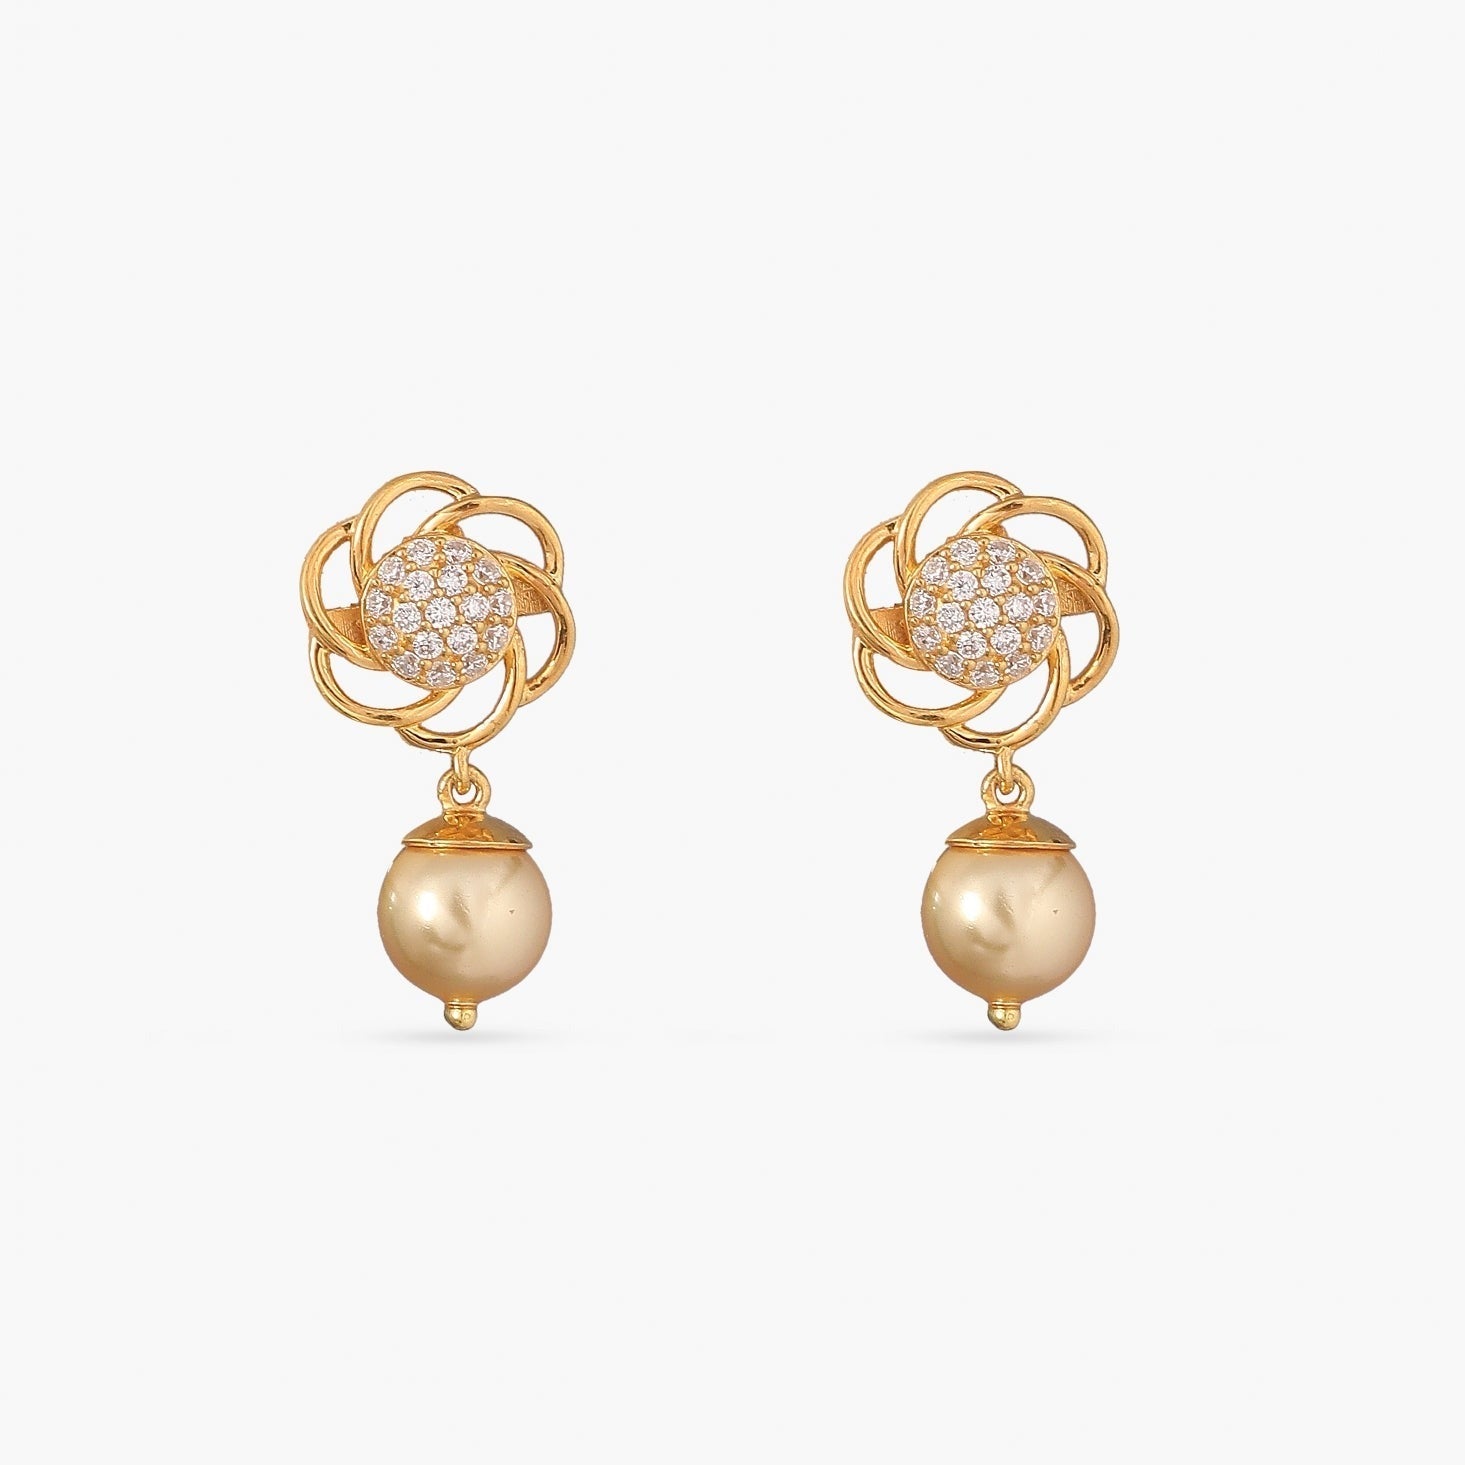 Buy Fashionable Pearl Earrings For Women Online - Bantashop – Brantashop